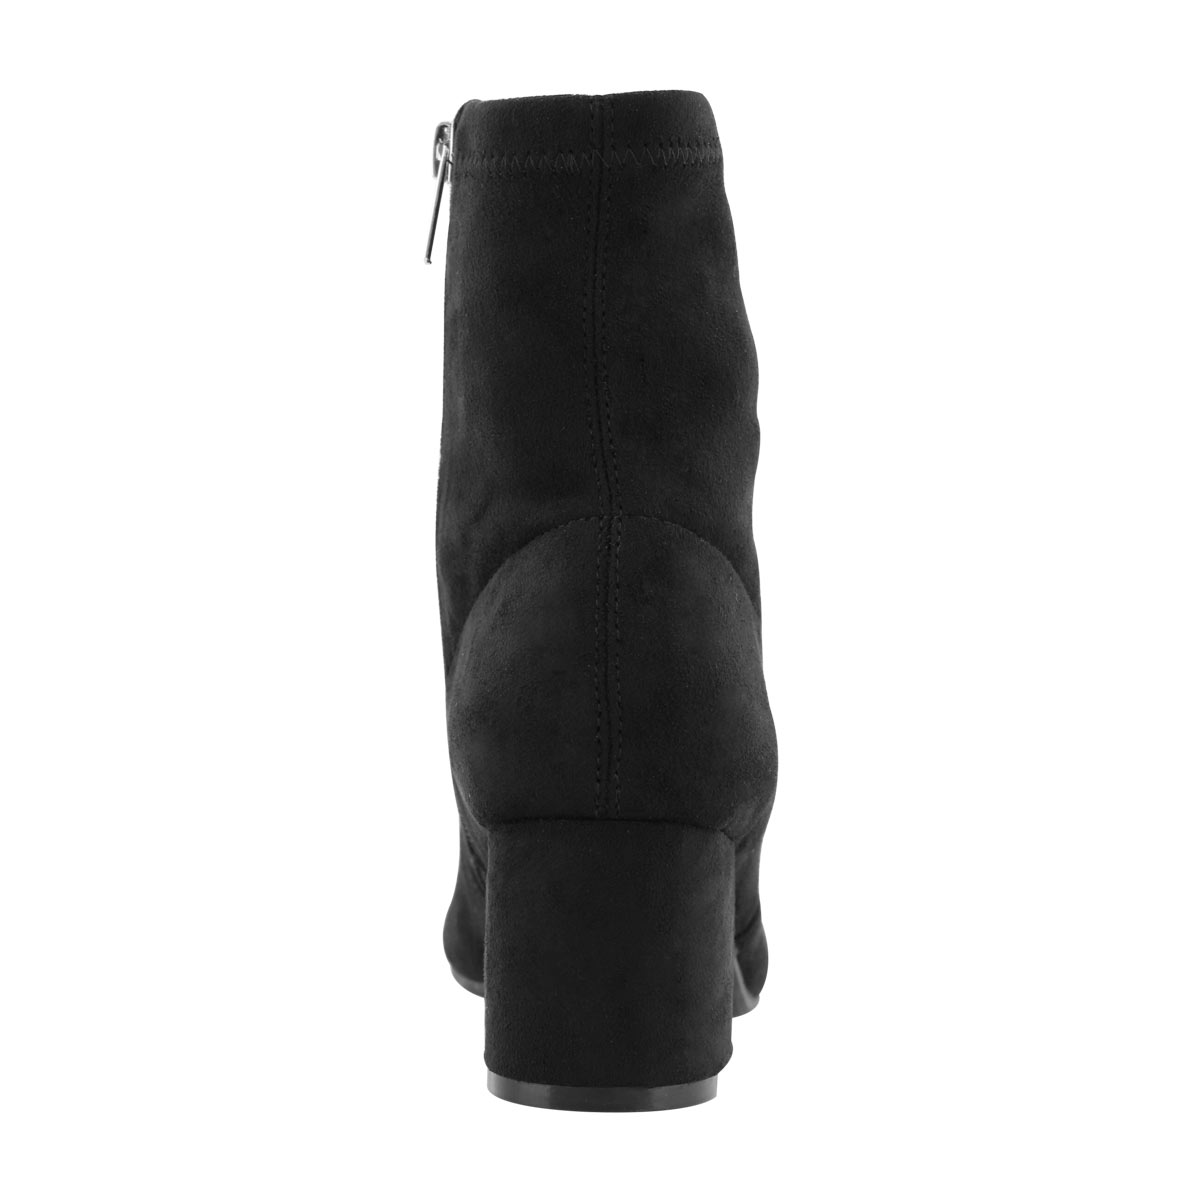 Steve Madden Women's Irven black dress boots | SoftMoc.com